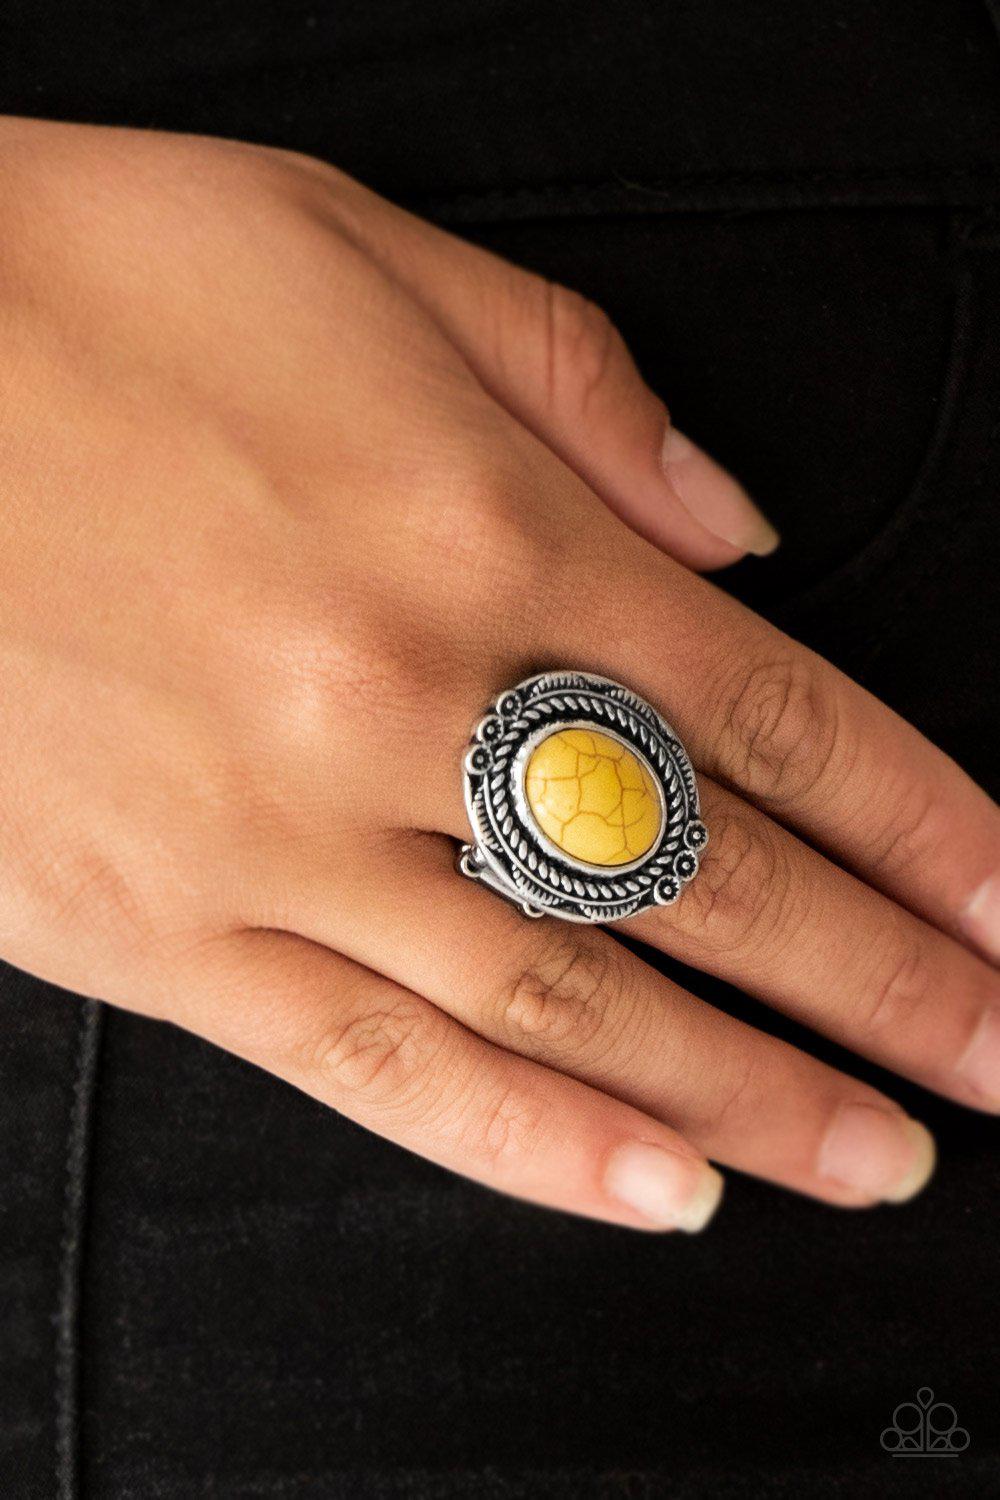 Tumblin' Tumbleweeds Yellow Stone Ring - Paparazzi Accessories - lightbox -CarasShop.com - $5 Jewelry by Cara Jewels